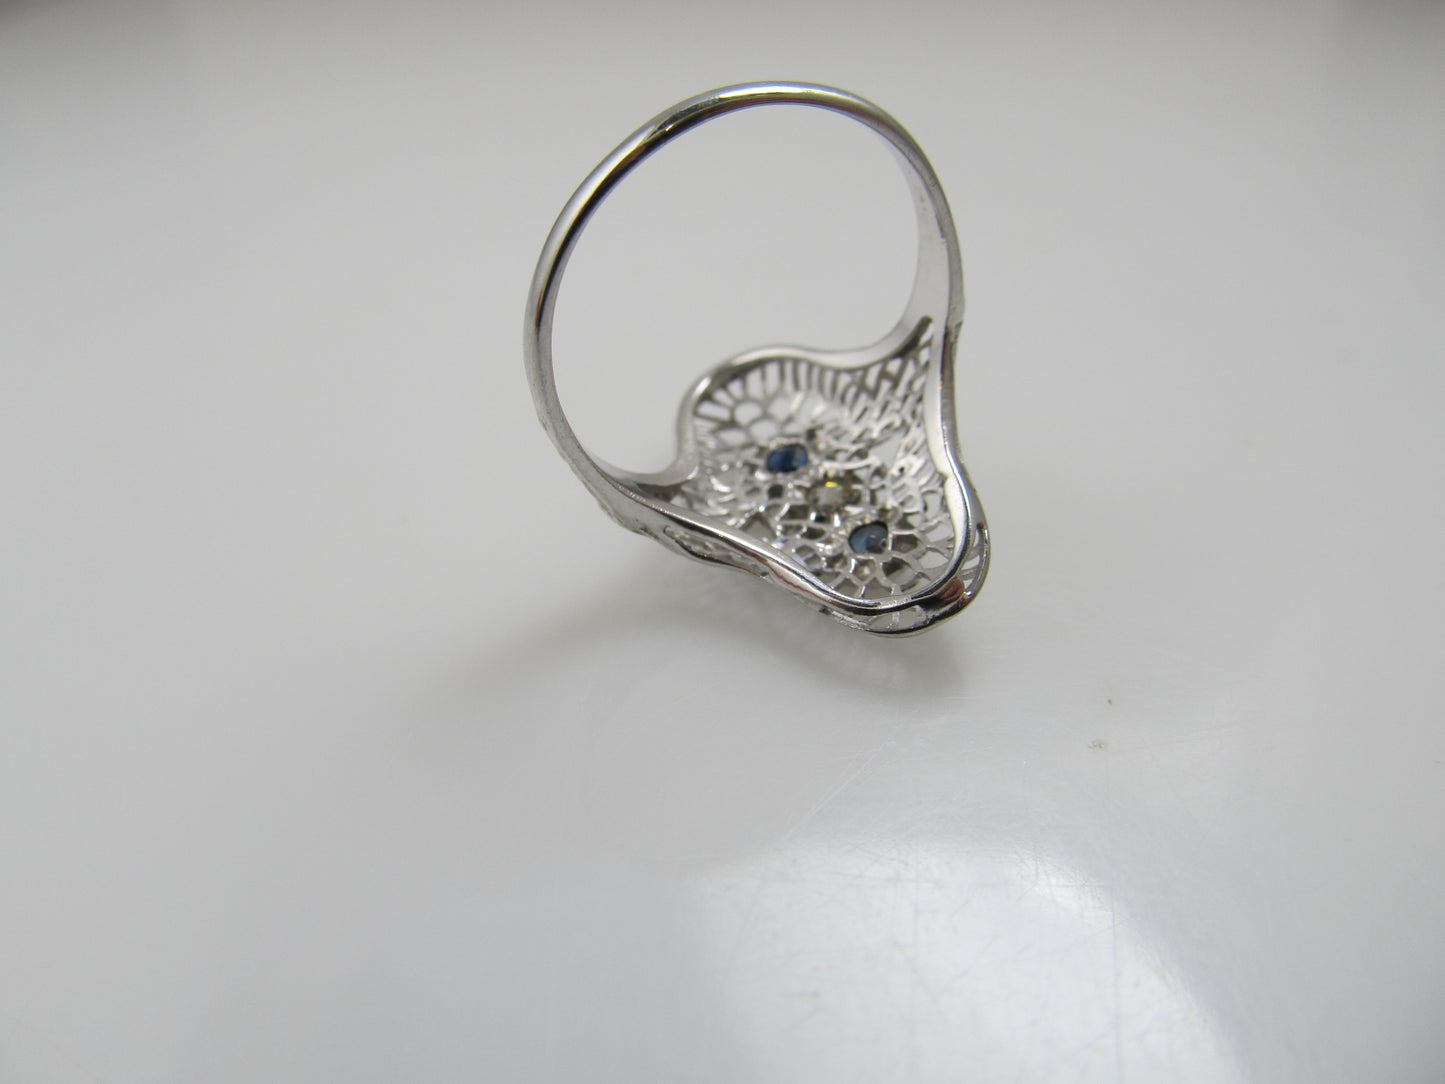 Long antique filigree sapphire diamond ring